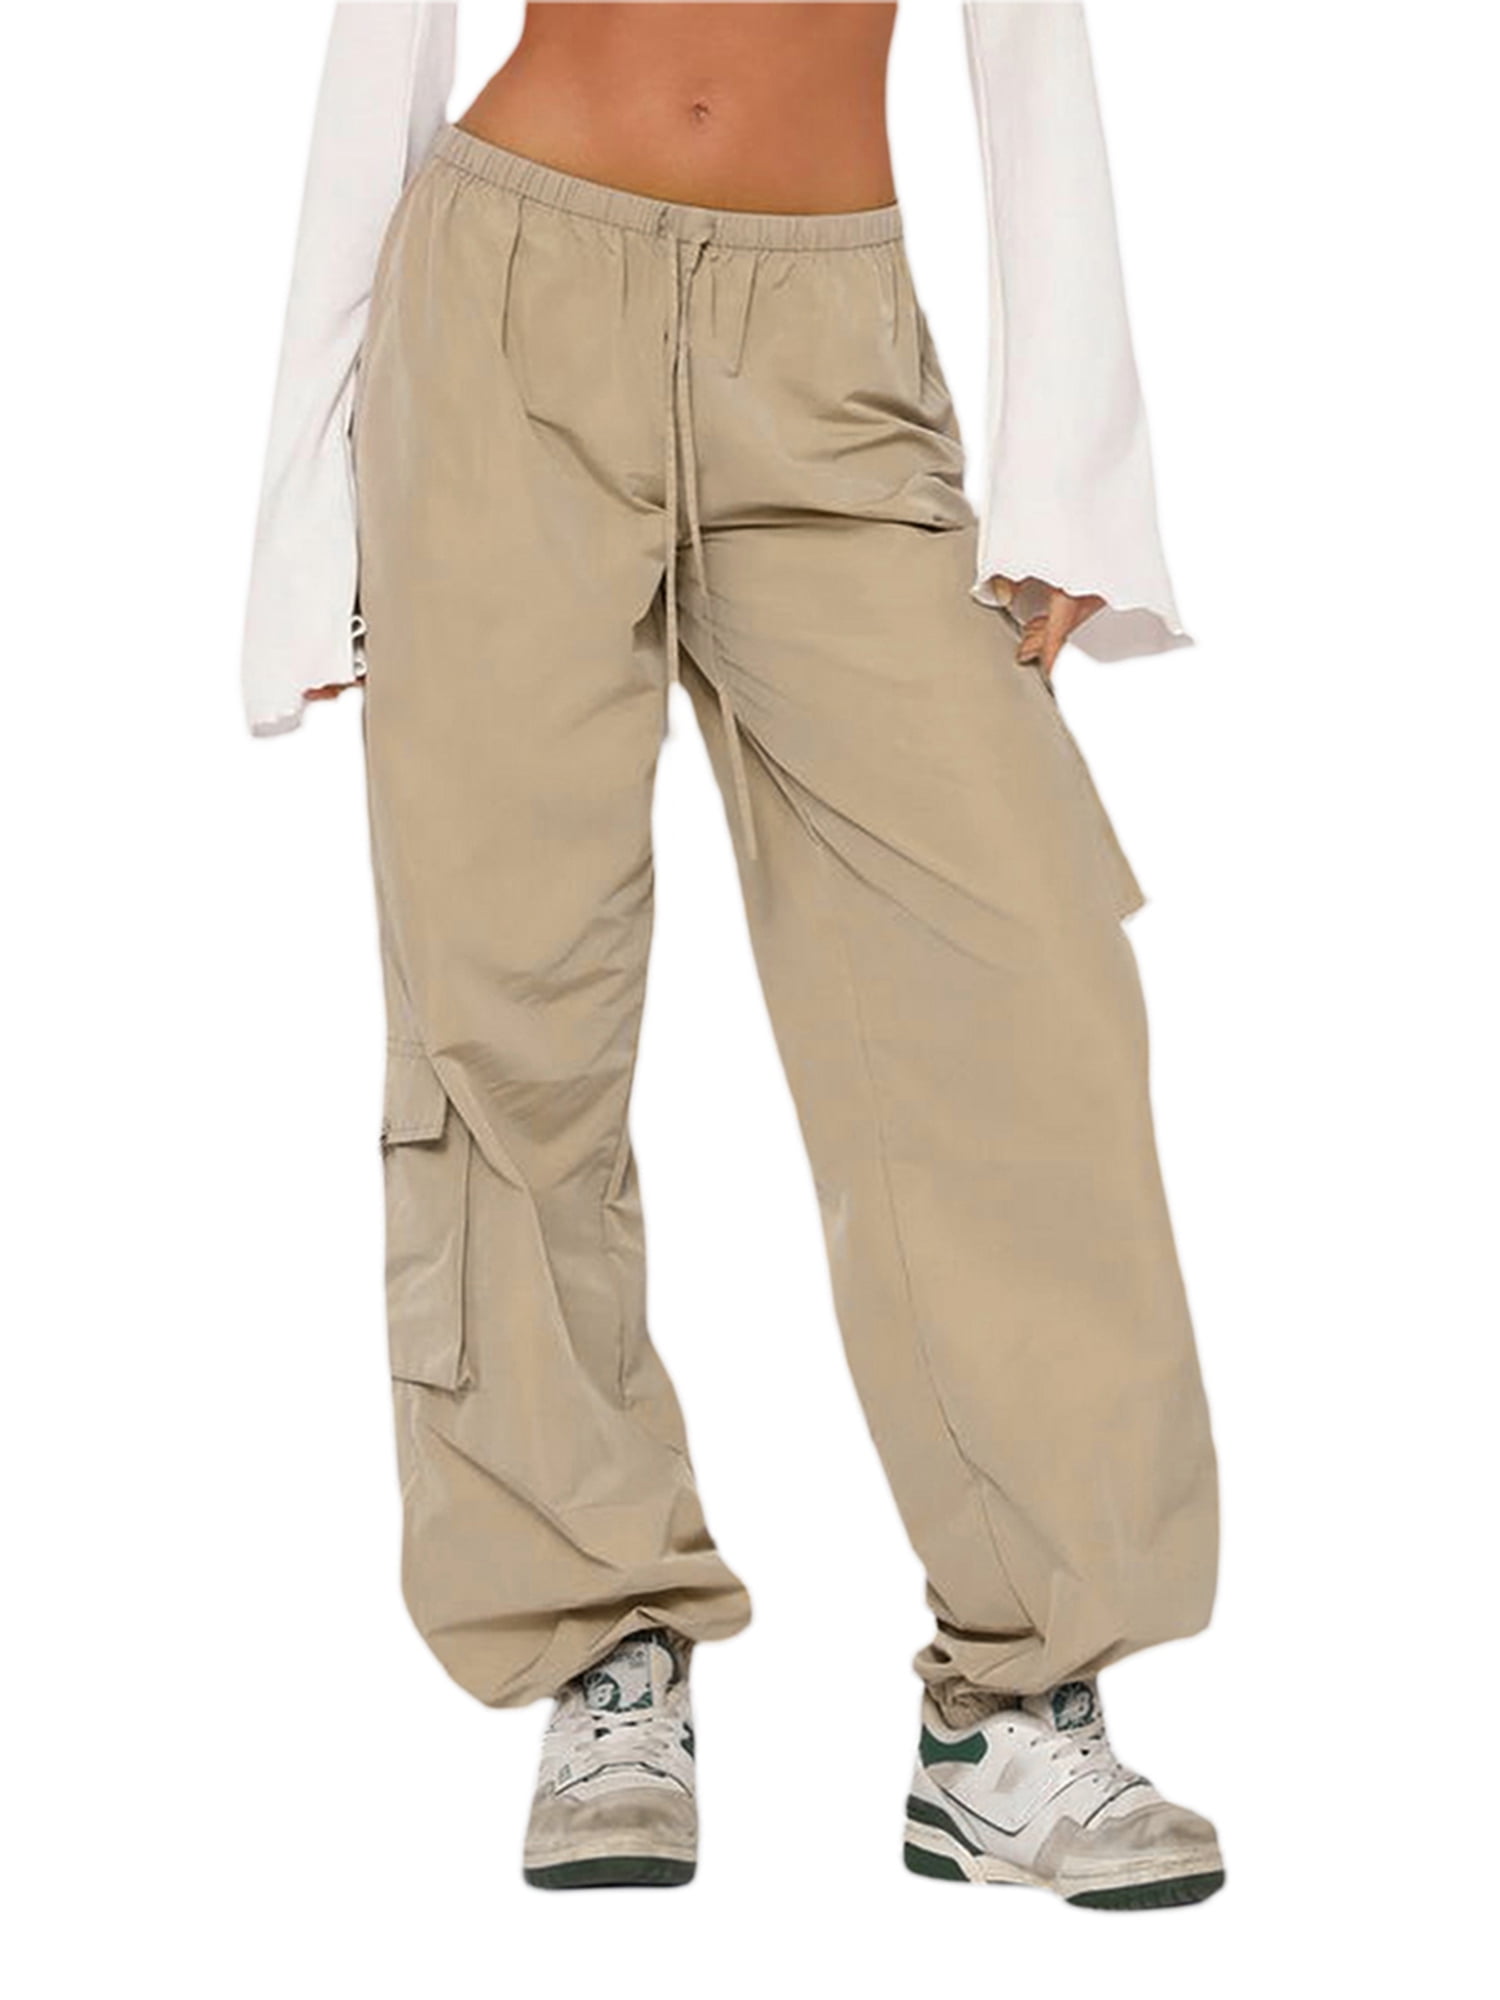 Women's Adjustable Drawstring Elastic Waist Baggy Cargo Pants